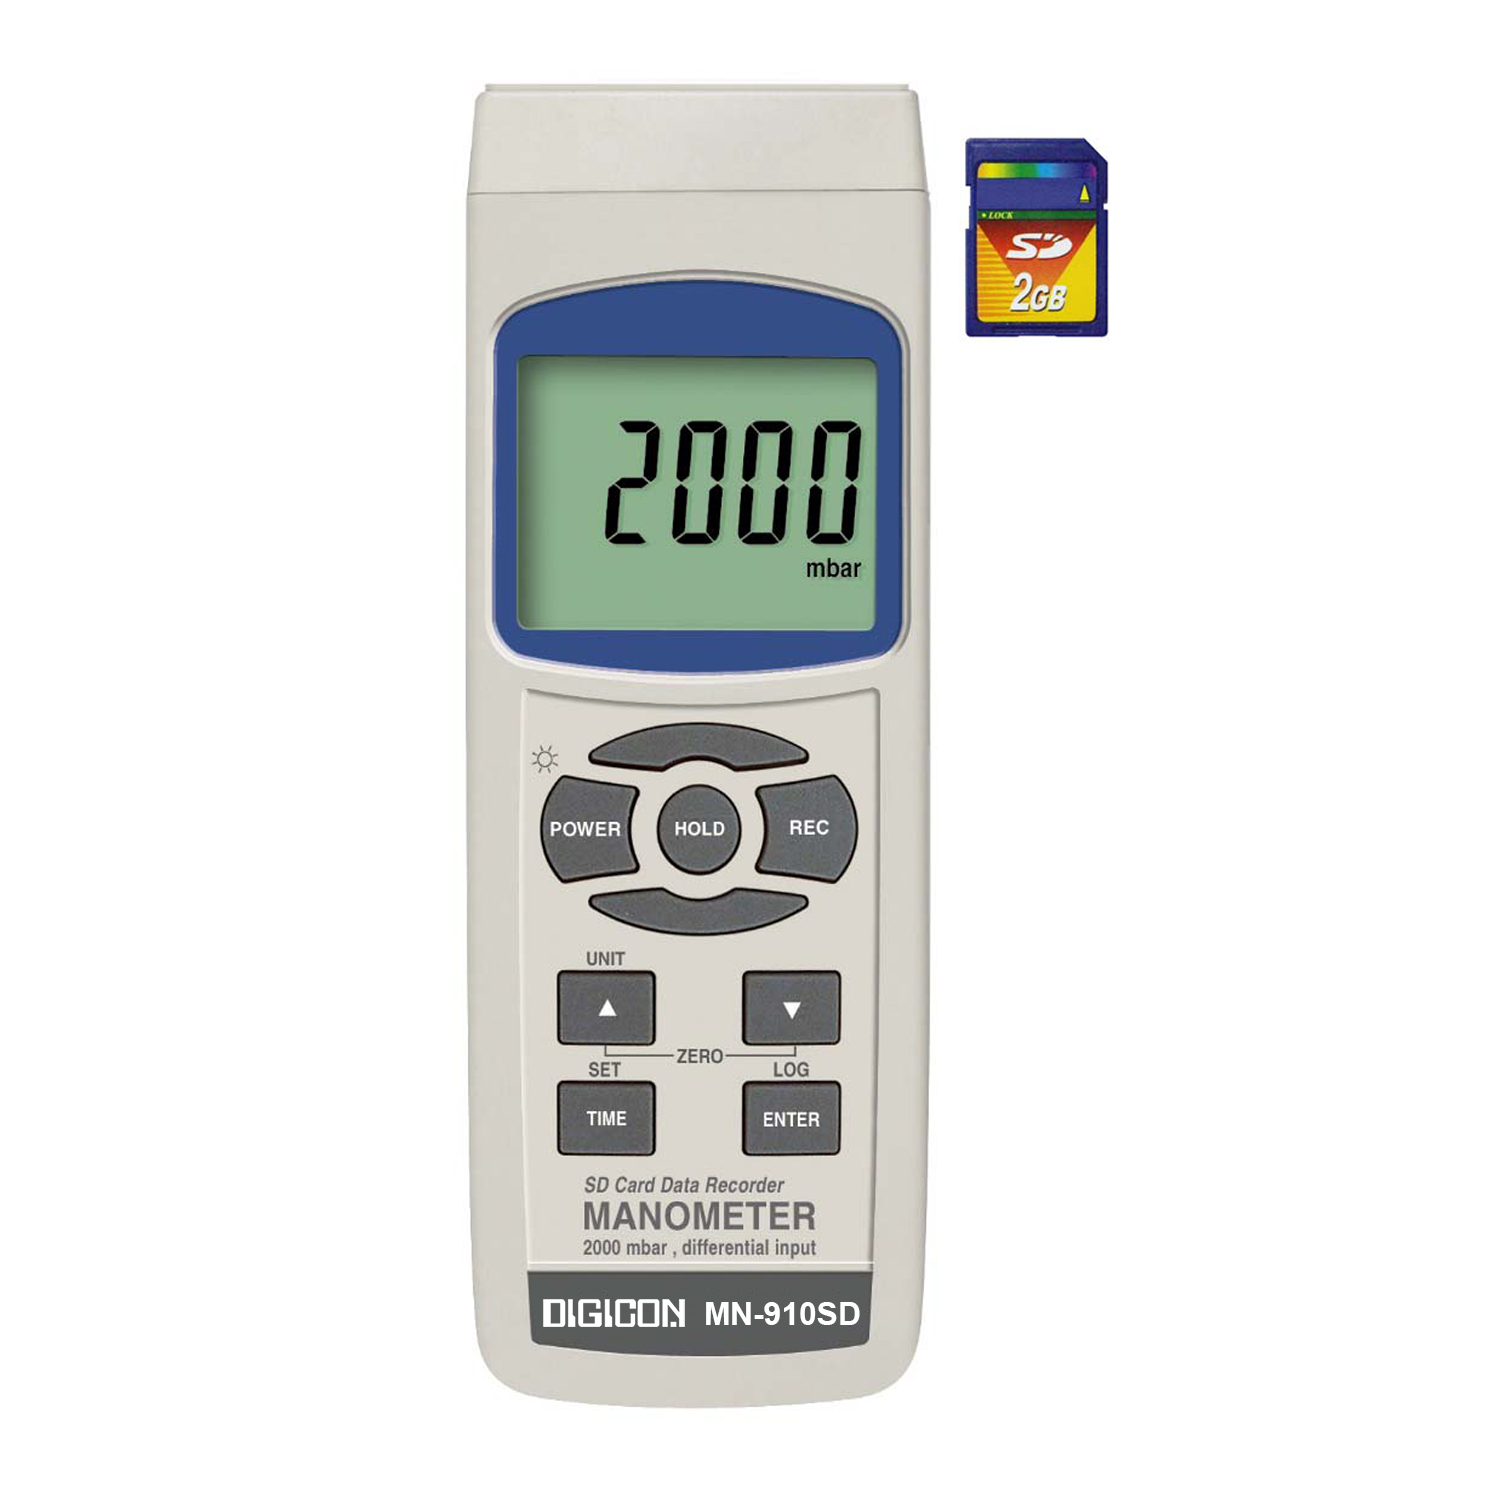 MN-910SD มาโนมิเตอร์บันทึกค่าผ่าน SD card / ราคา 